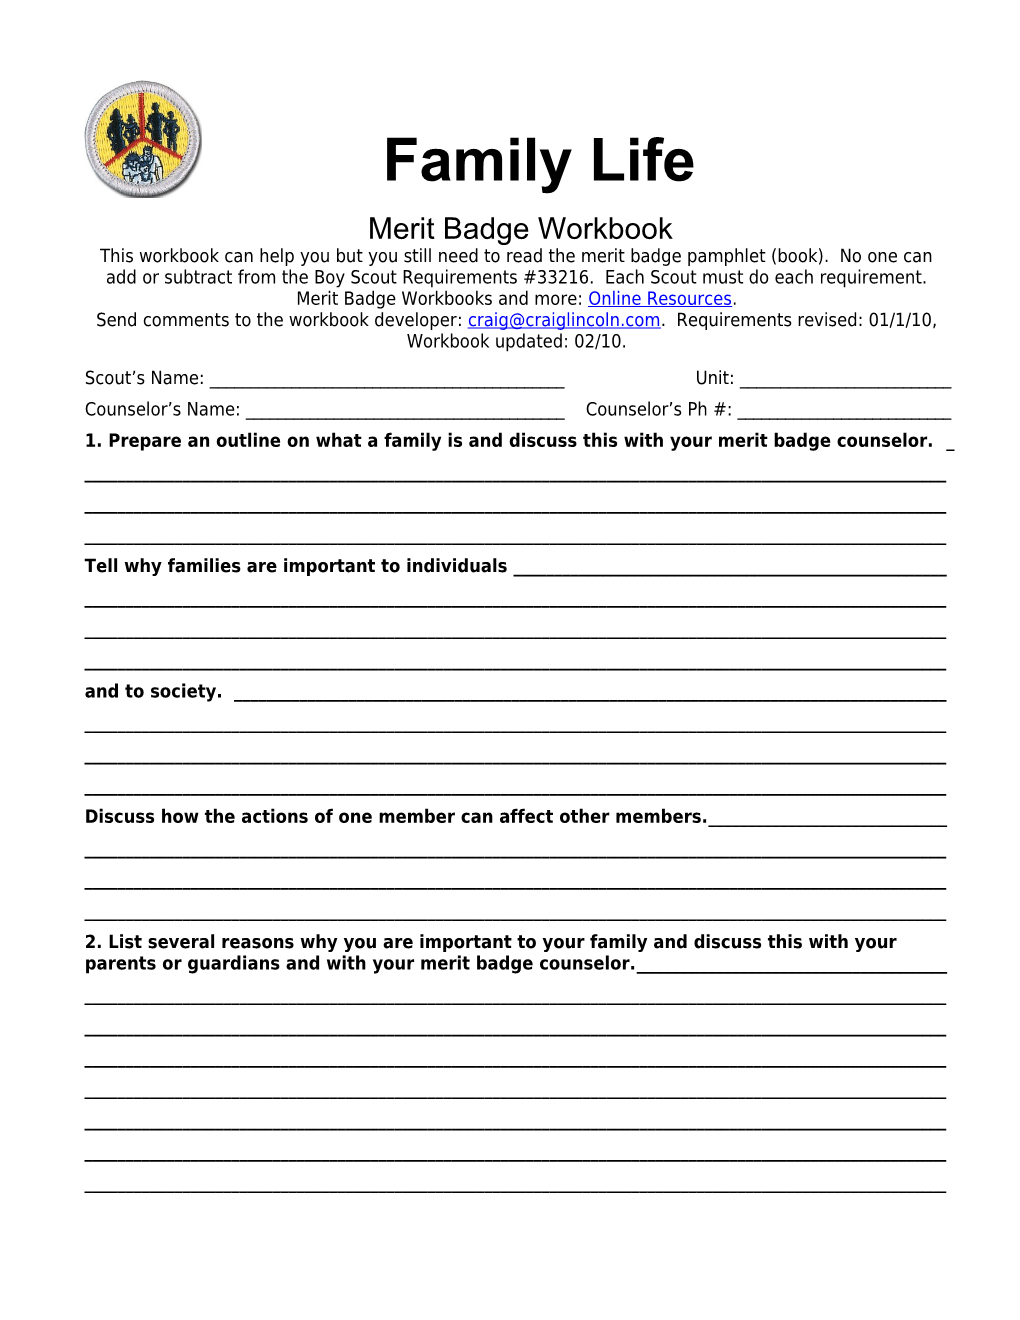 Family Life P. 4 Merit Badge Workbook Scout S Name: ______